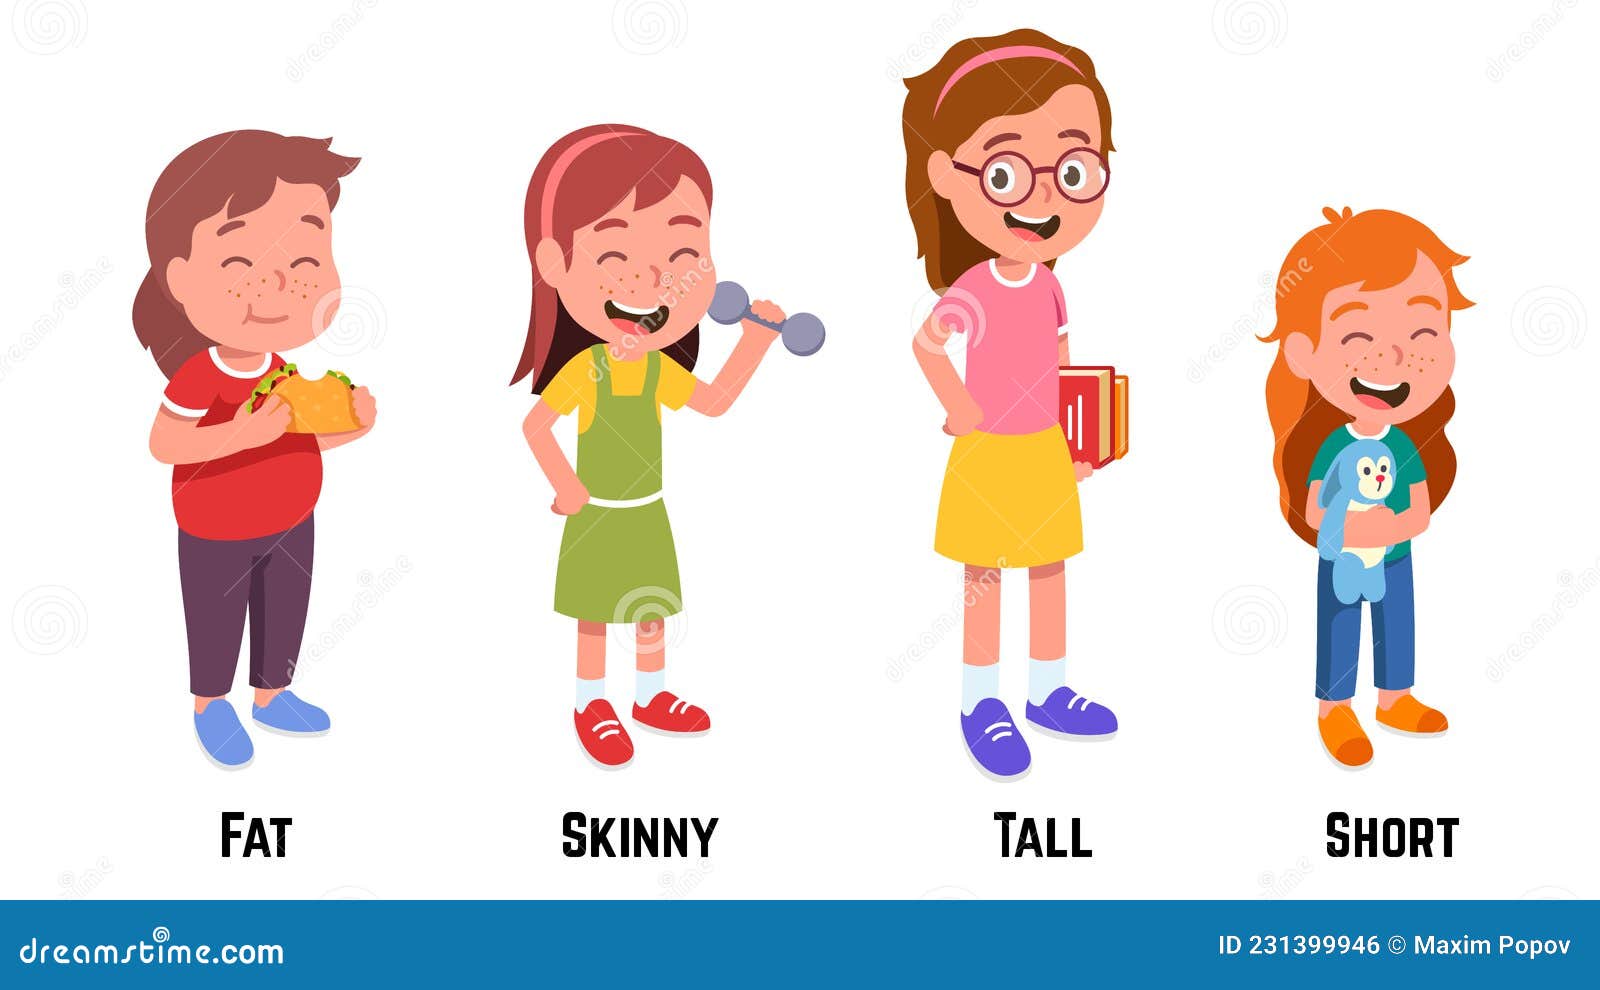 fat, skinny, tall, short girls characters set